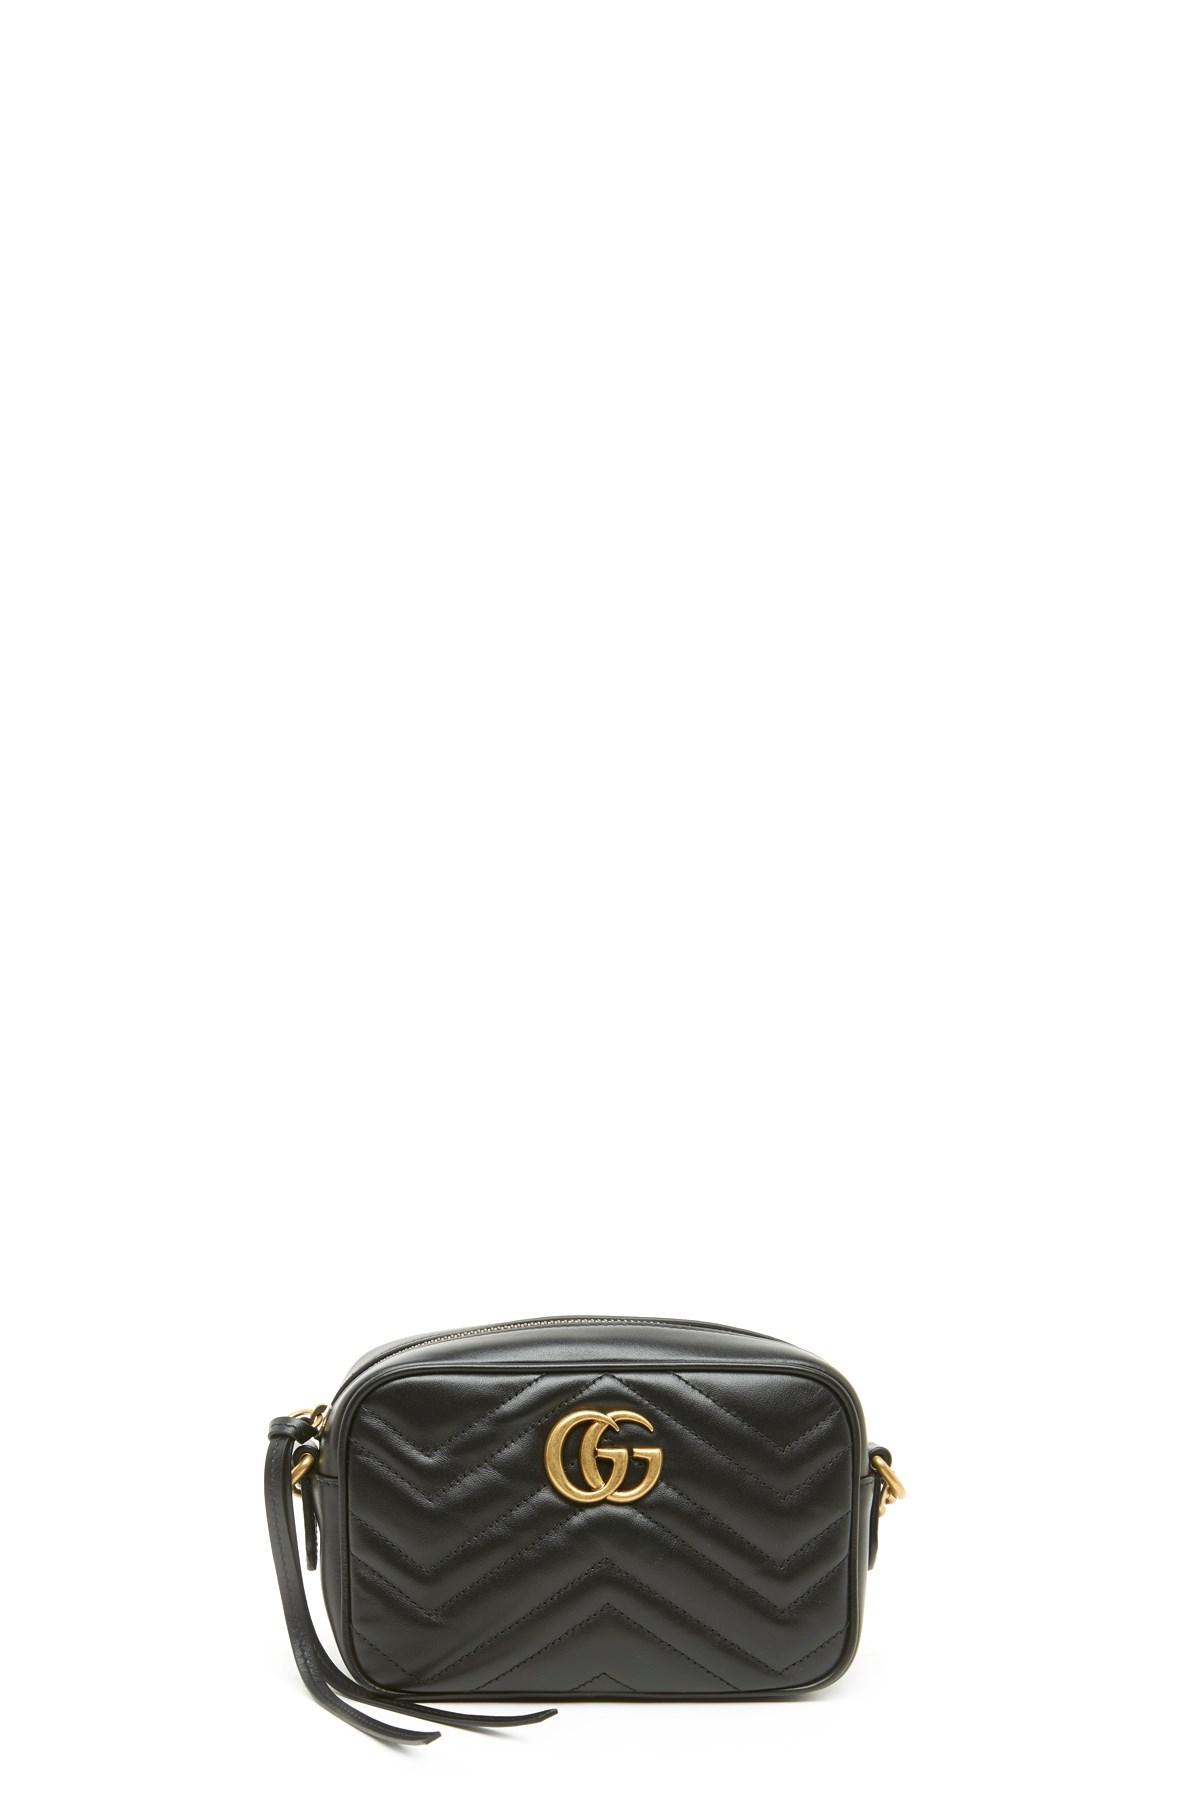 Gucci &#39;GG Marmont 2.0&#39; Crossbody Bag in Black - Lyst